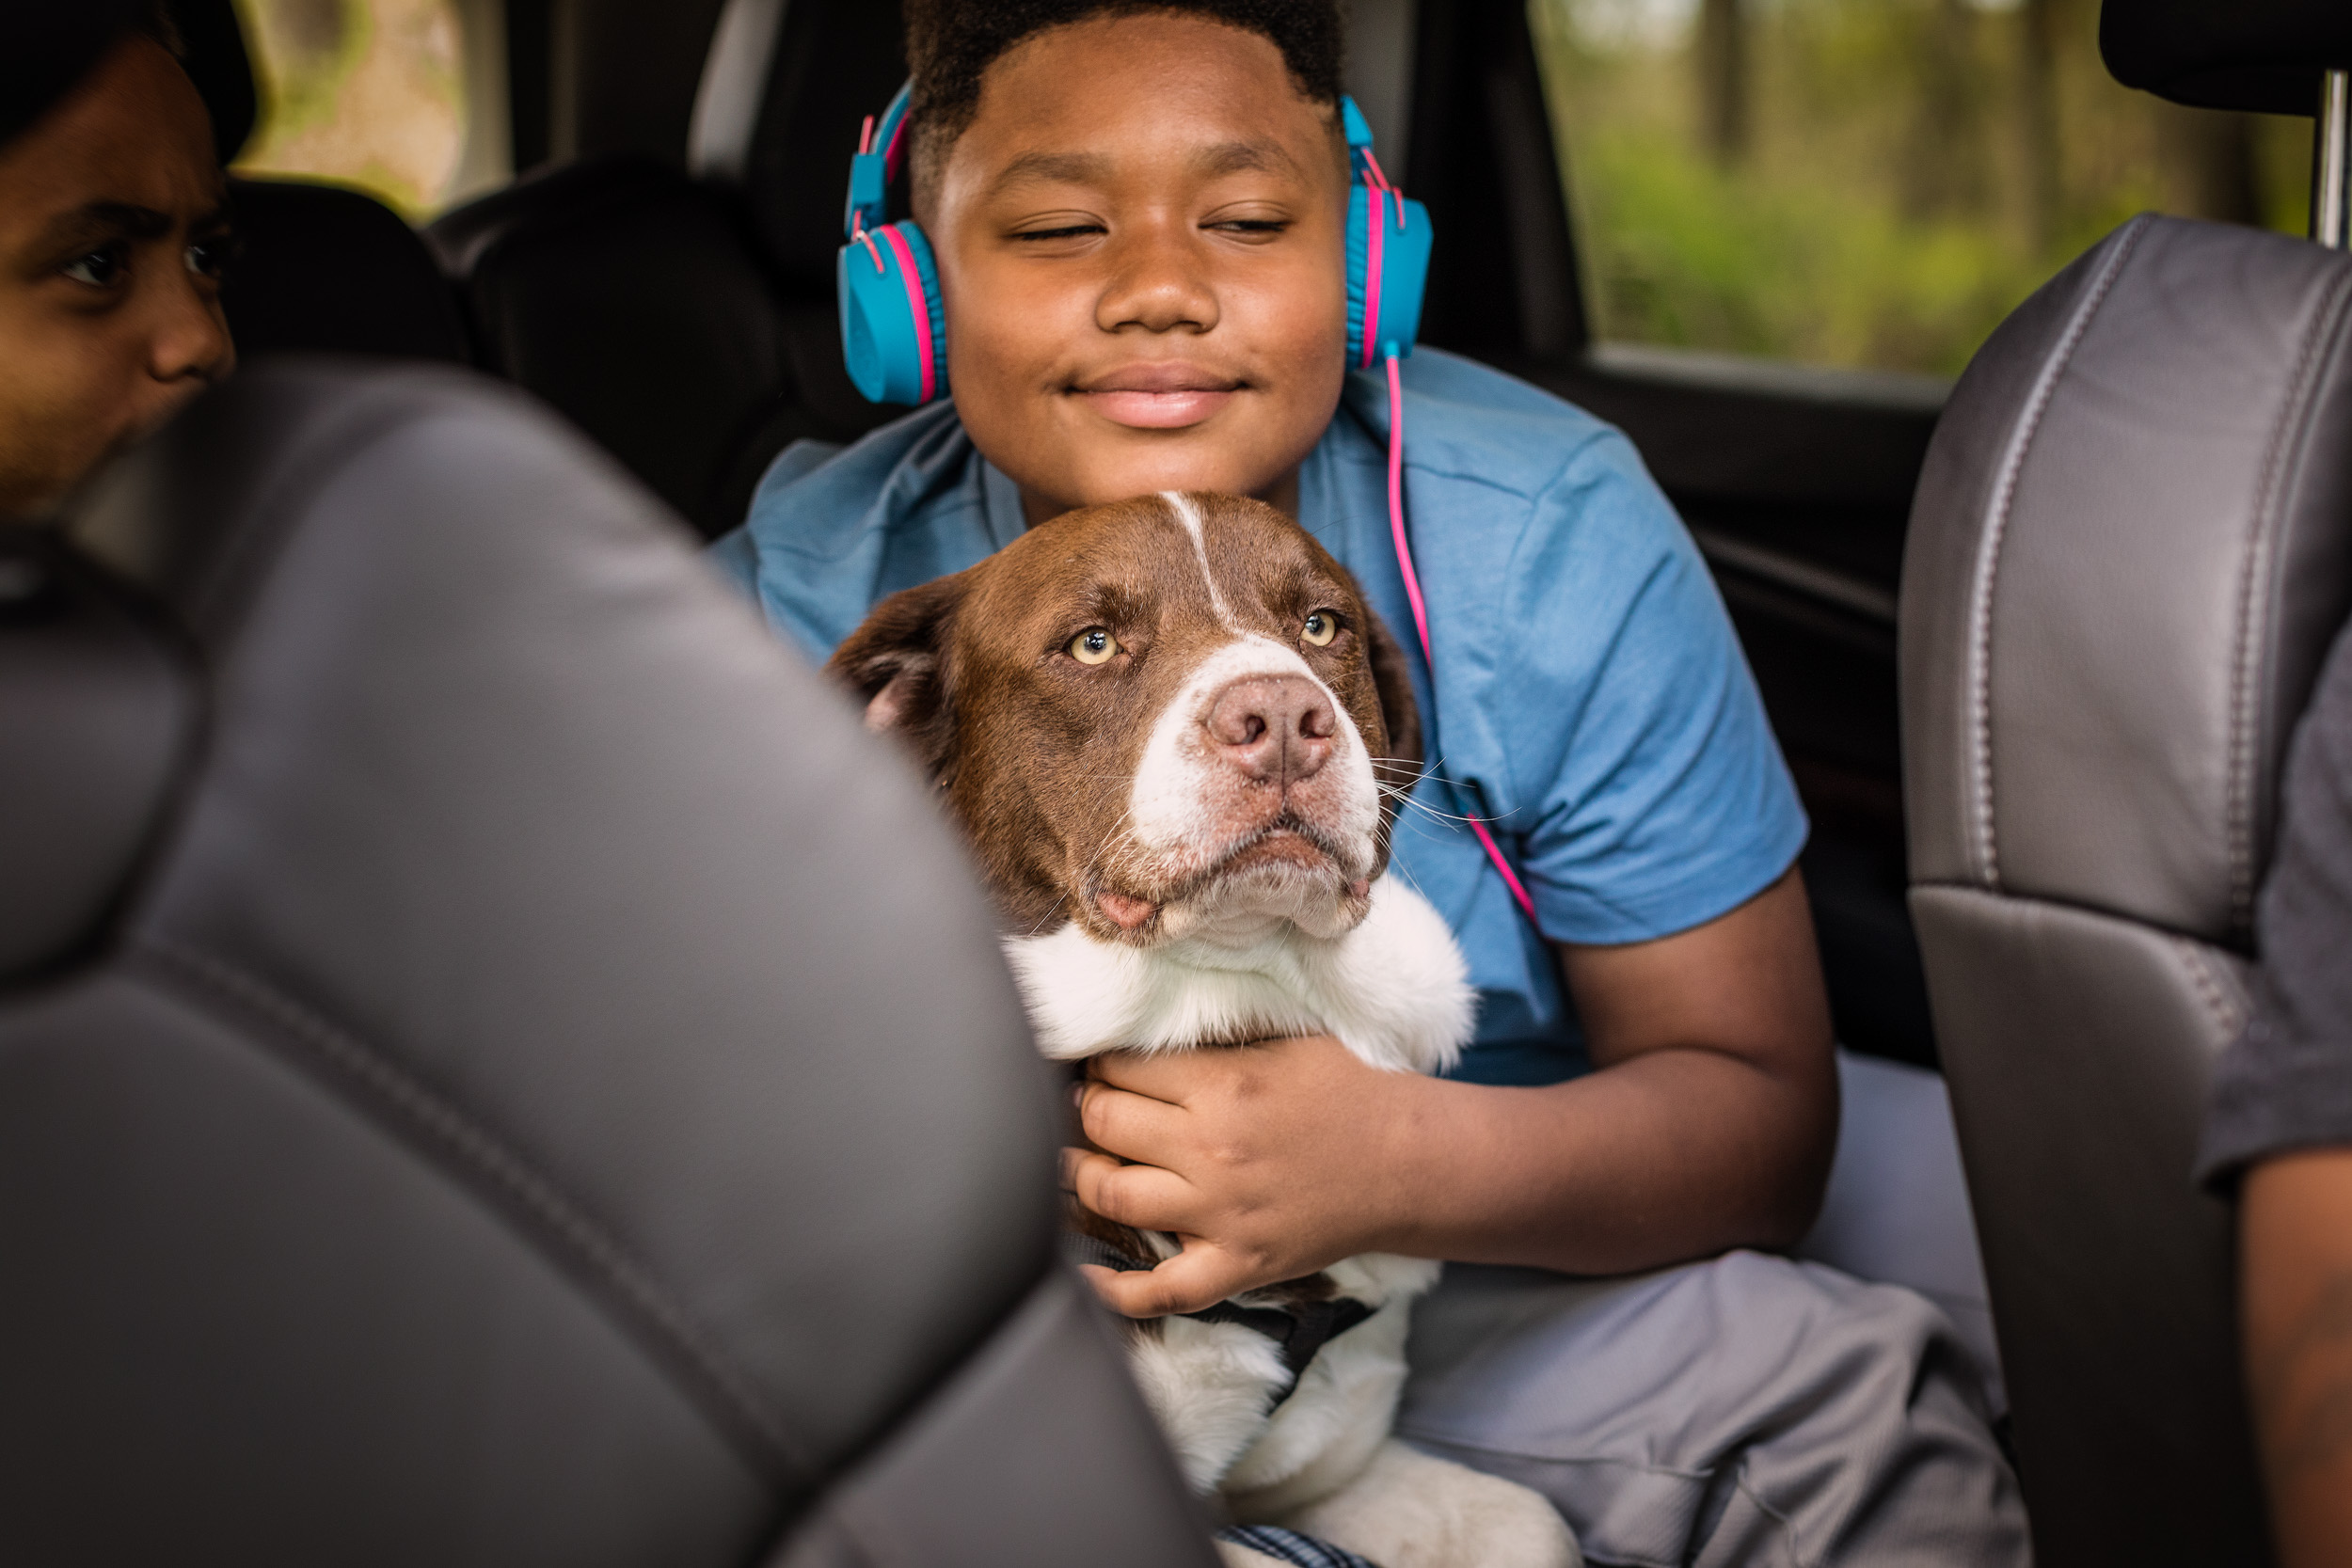 young boy wearing headphones hugging dog in car